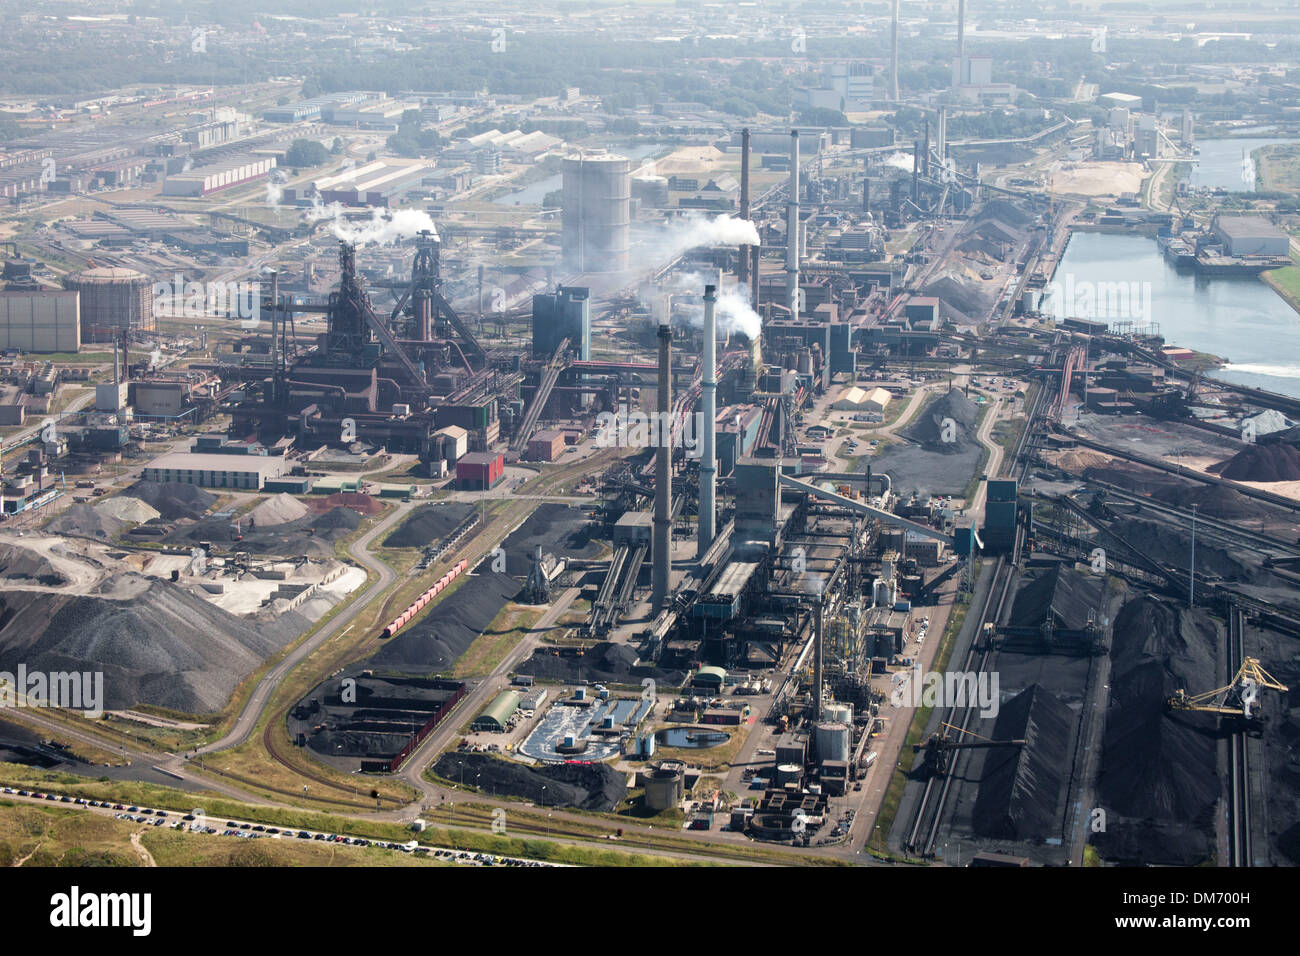 Corporate investigation announced at Steel Mill: Tata Steel (IJmuiden) in  Netherlands, NL - Prewave.ai